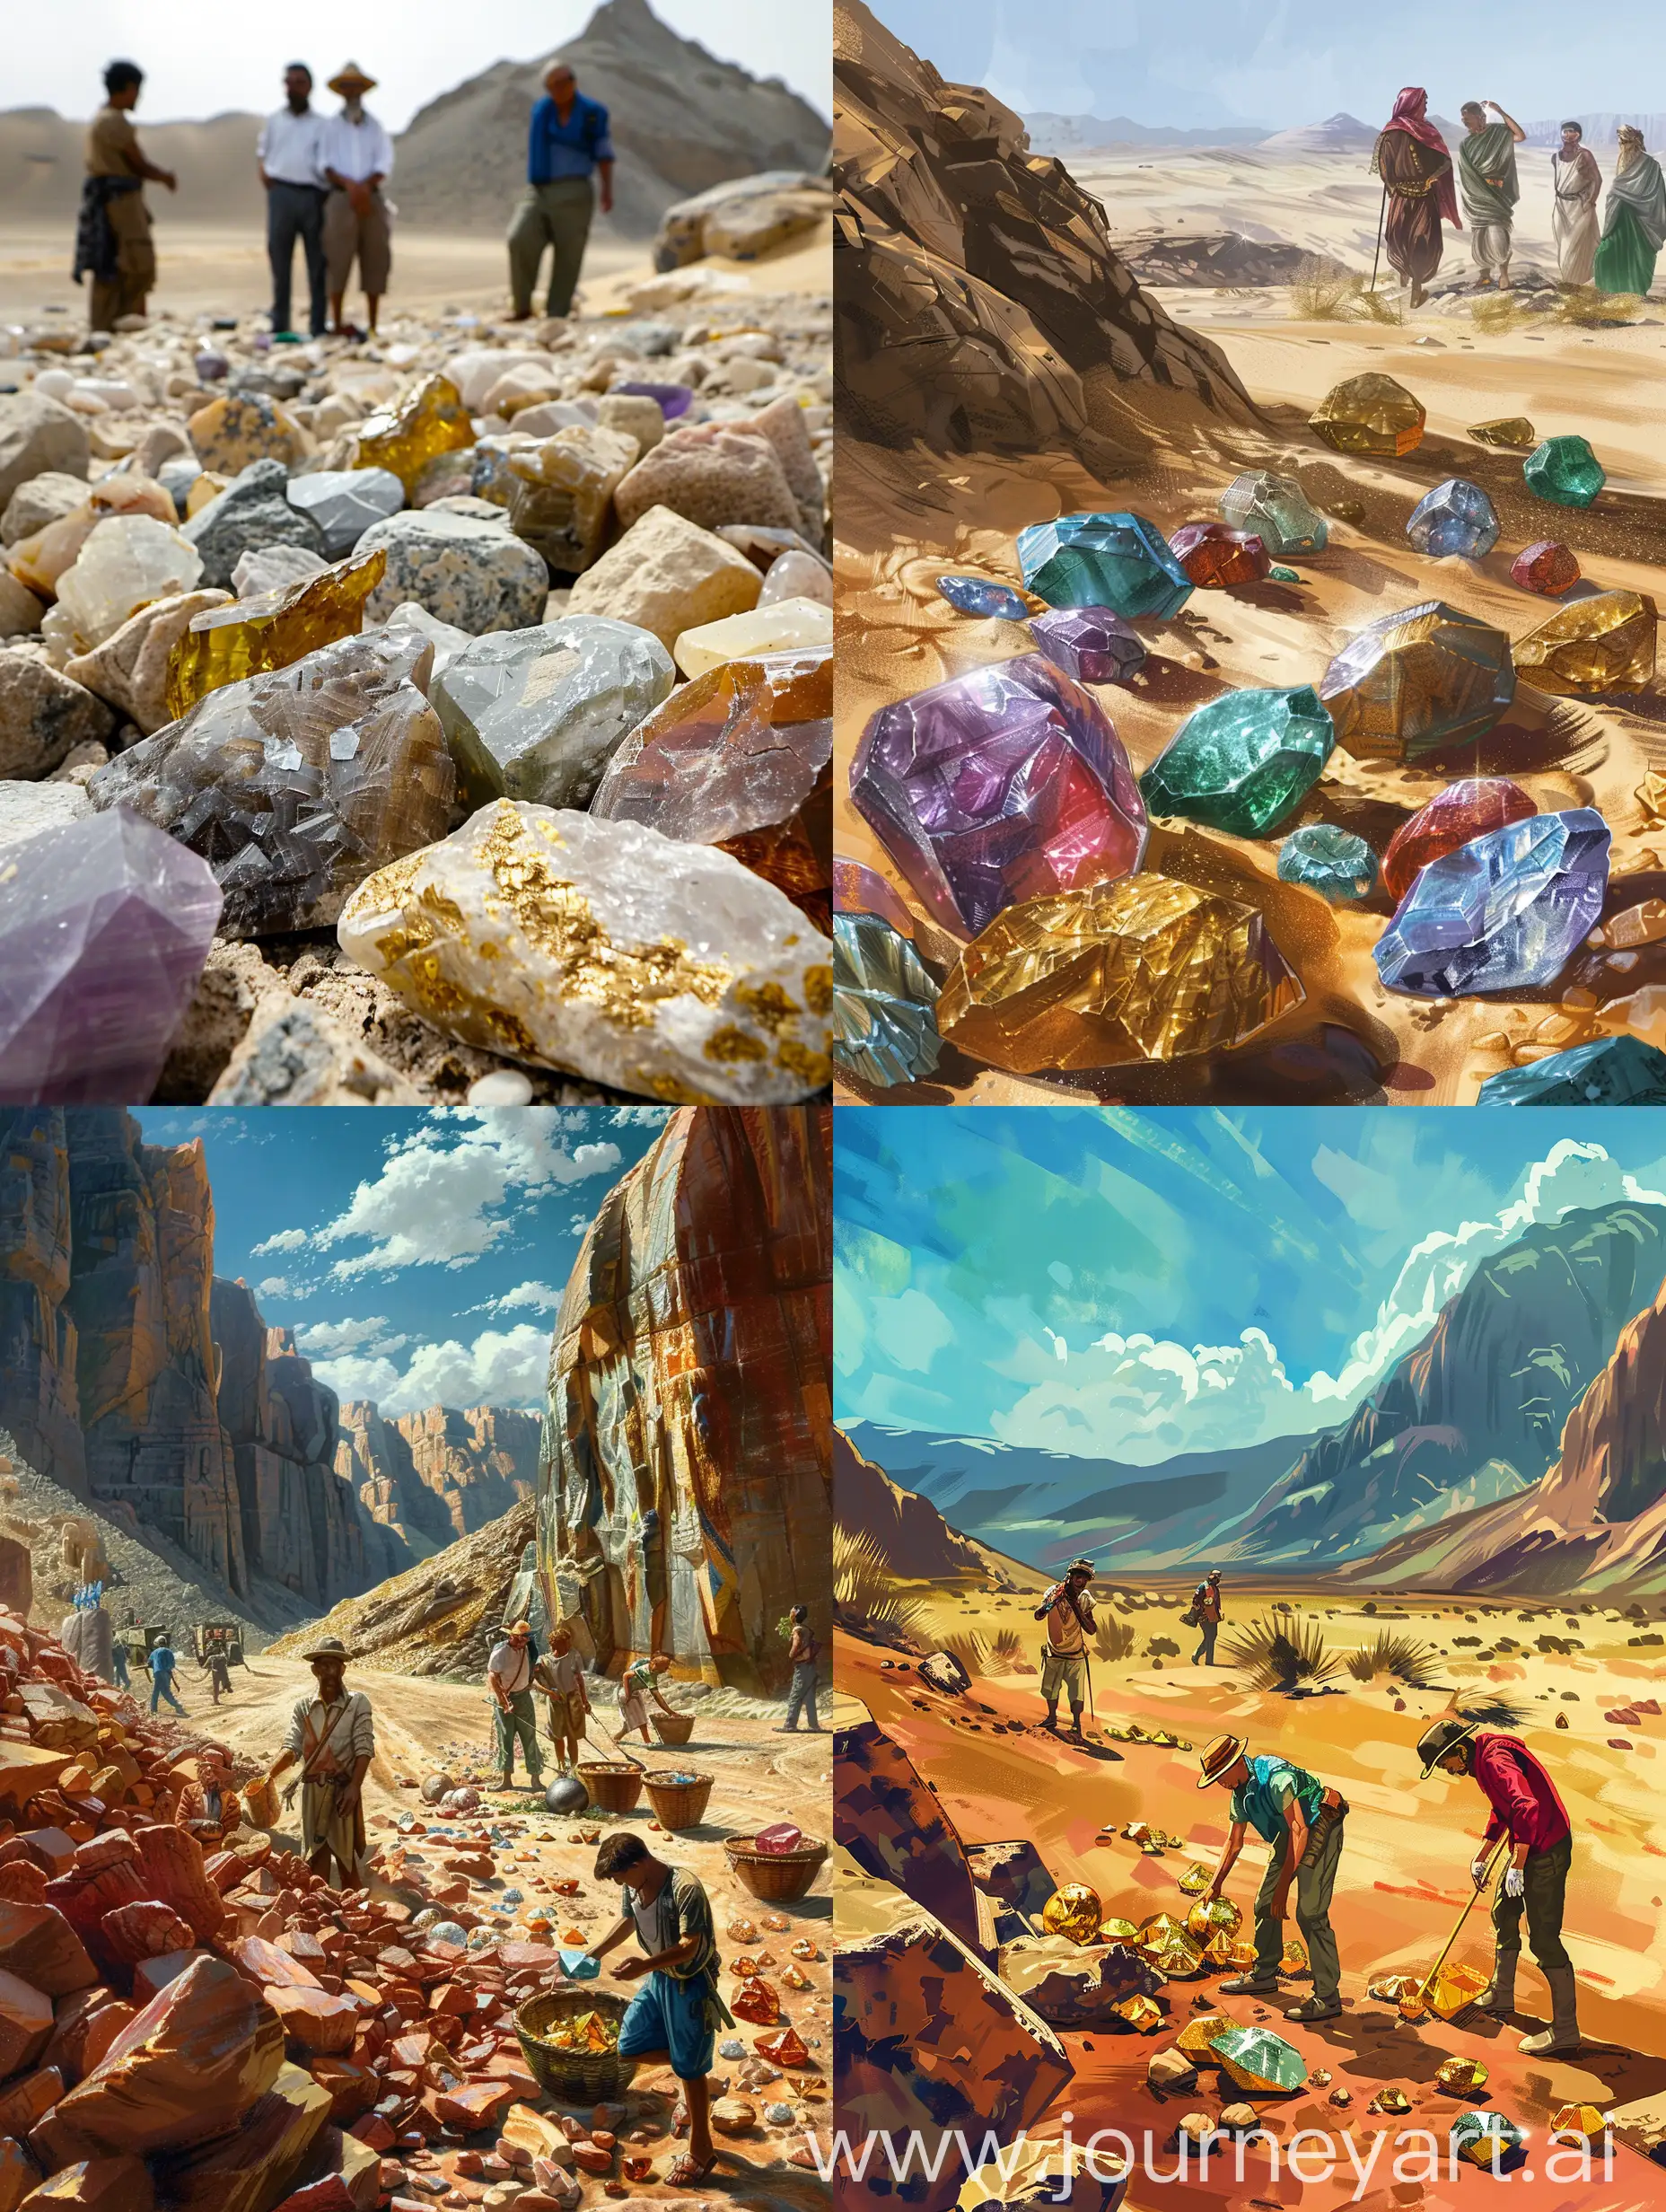 Treasure-Hunters-Discover-Precious-Stones-in-Desert-Expedition